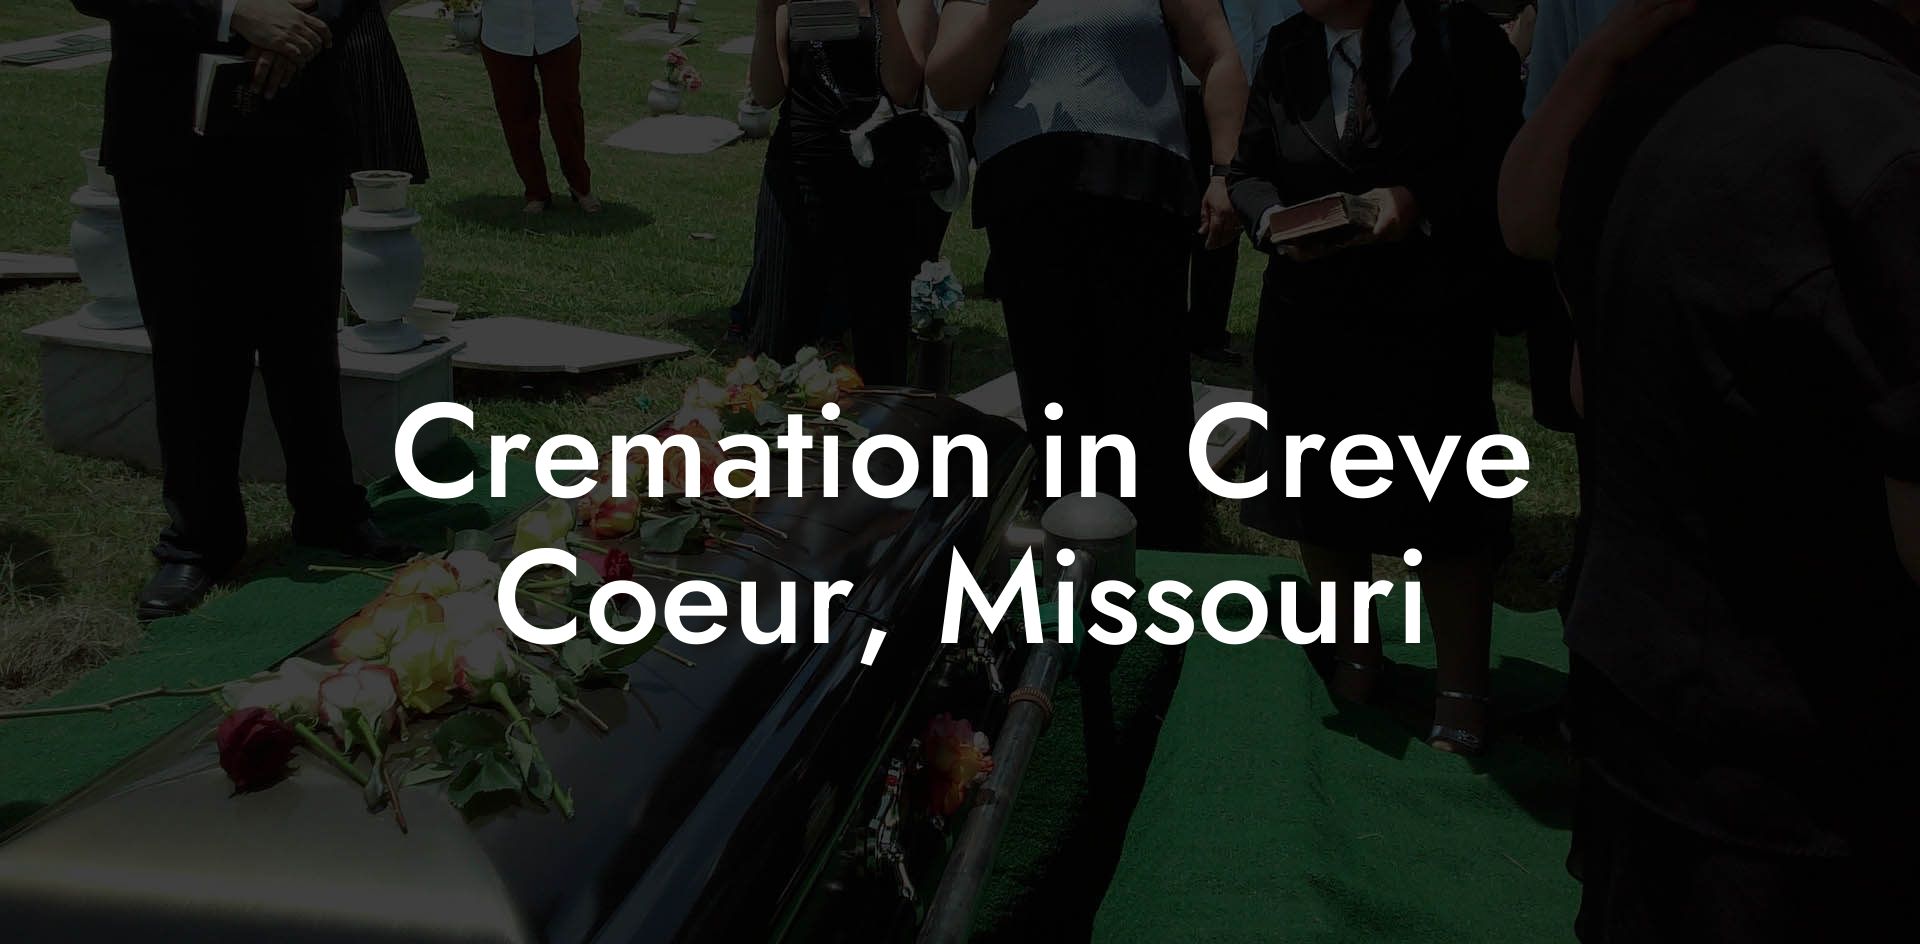 Cremation in Creve Coeur, Missouri